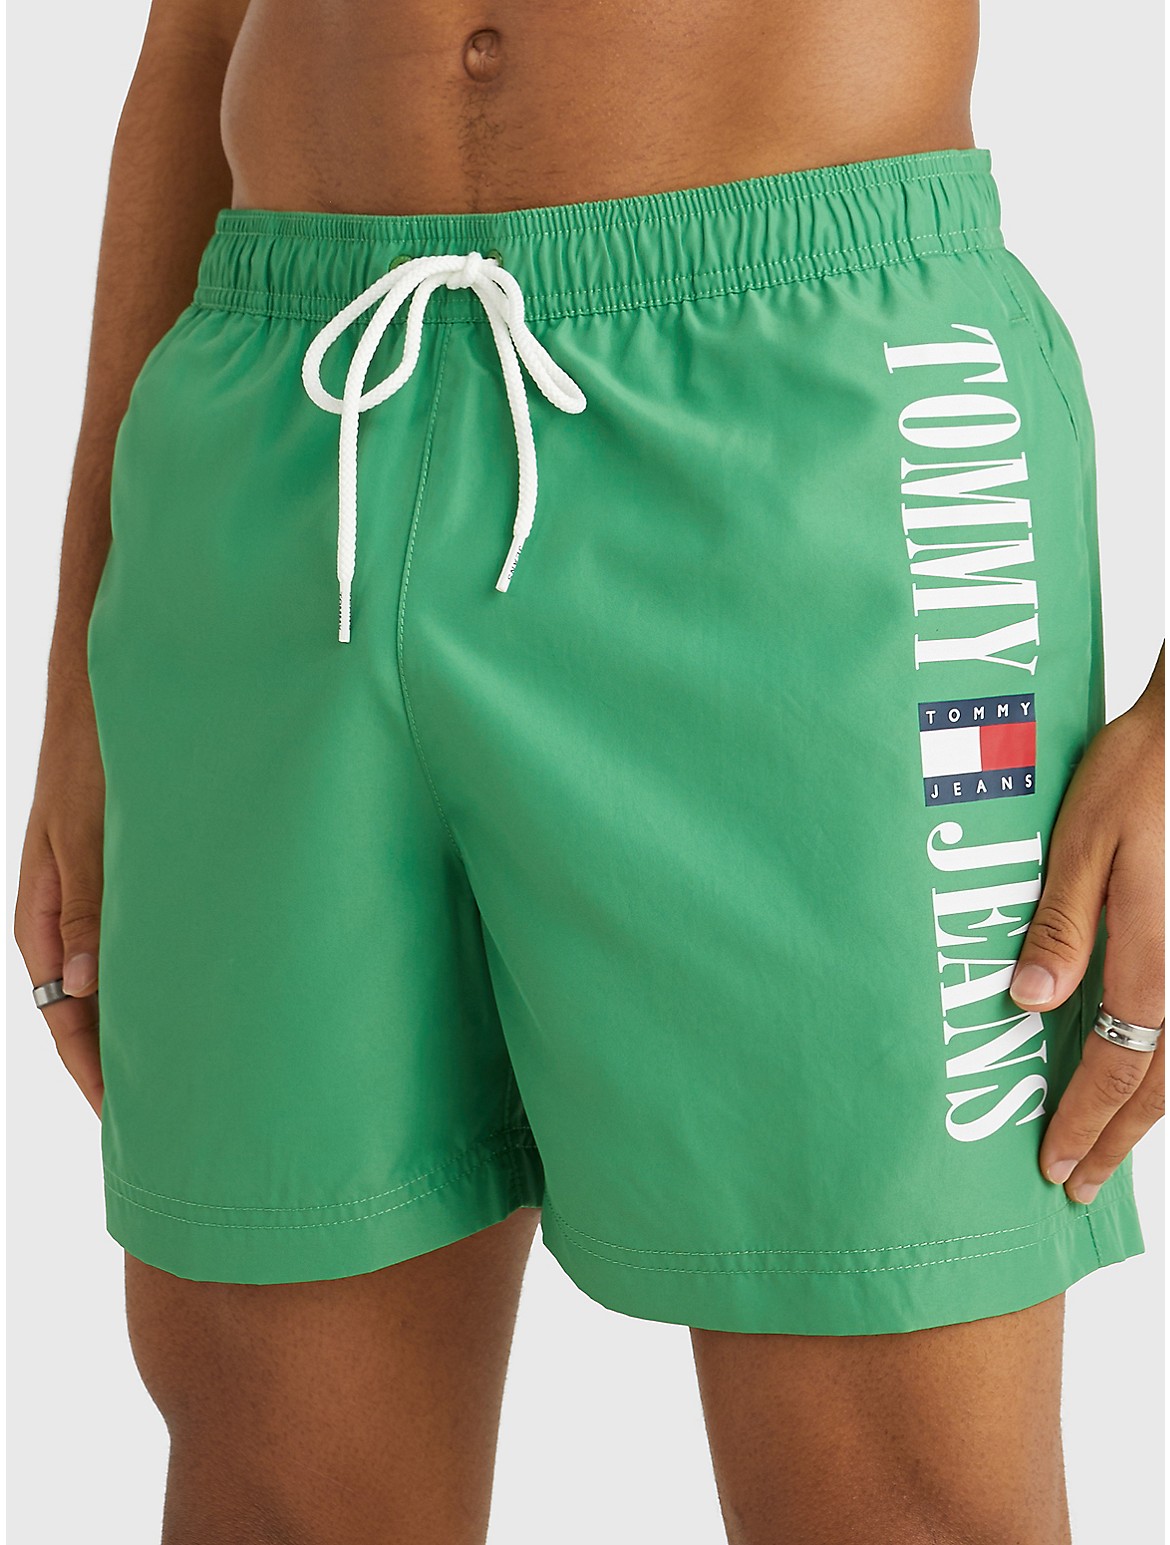 Tommy Hilfiger Men's Logo Print 7" Swim Trunk - Green - L